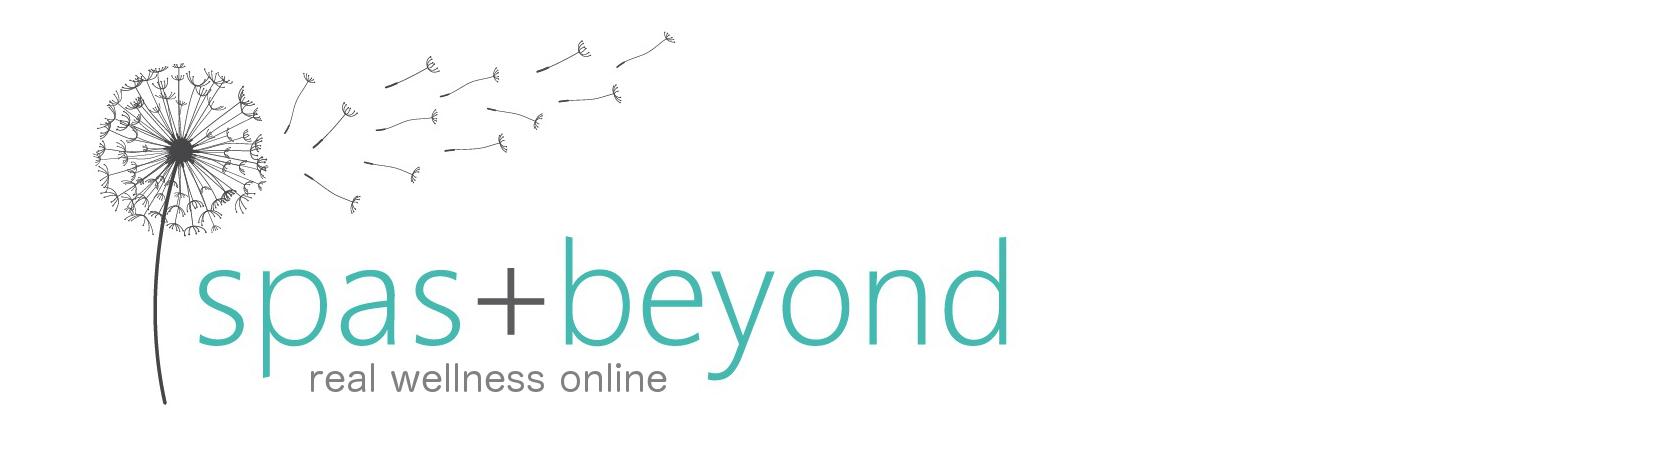 spas beyond logo 2